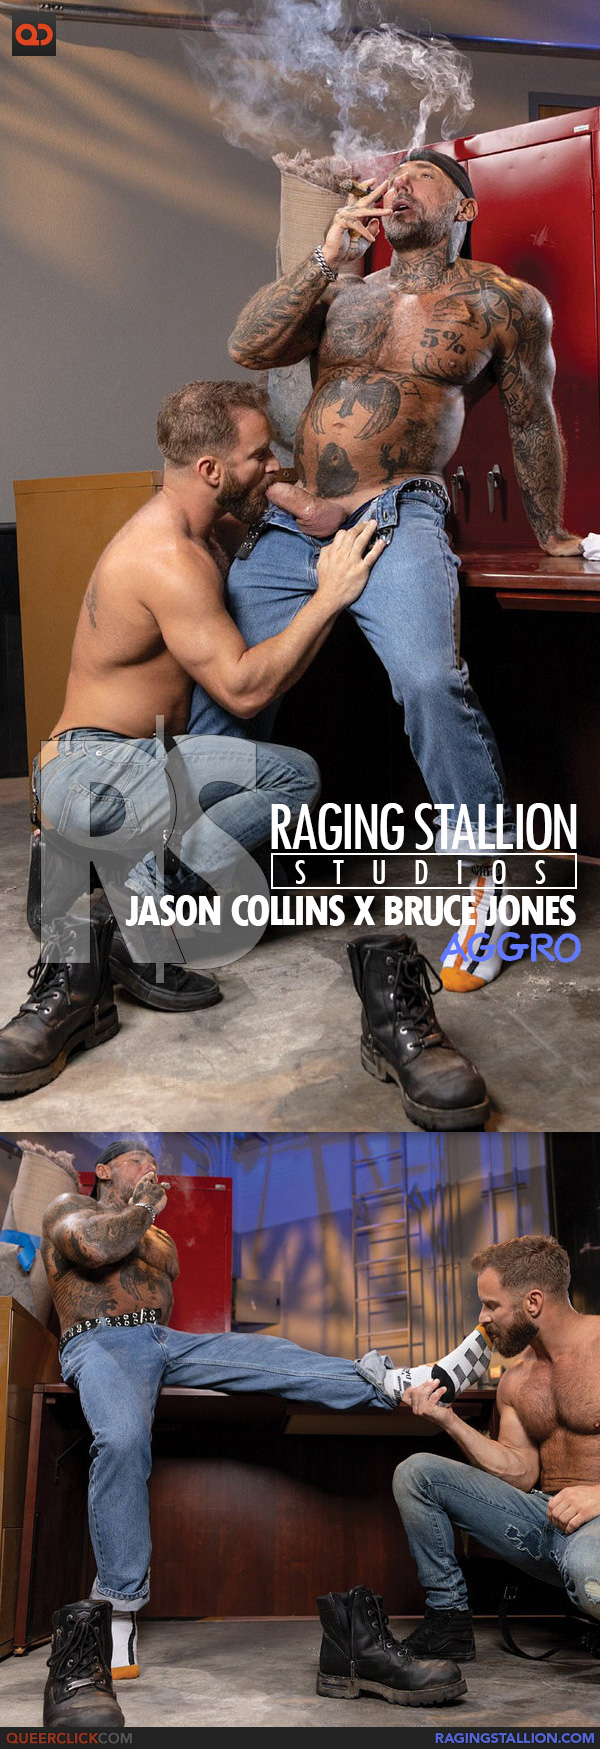 Raging Stallion: Jason Collins and Bruce Jones - Aggro